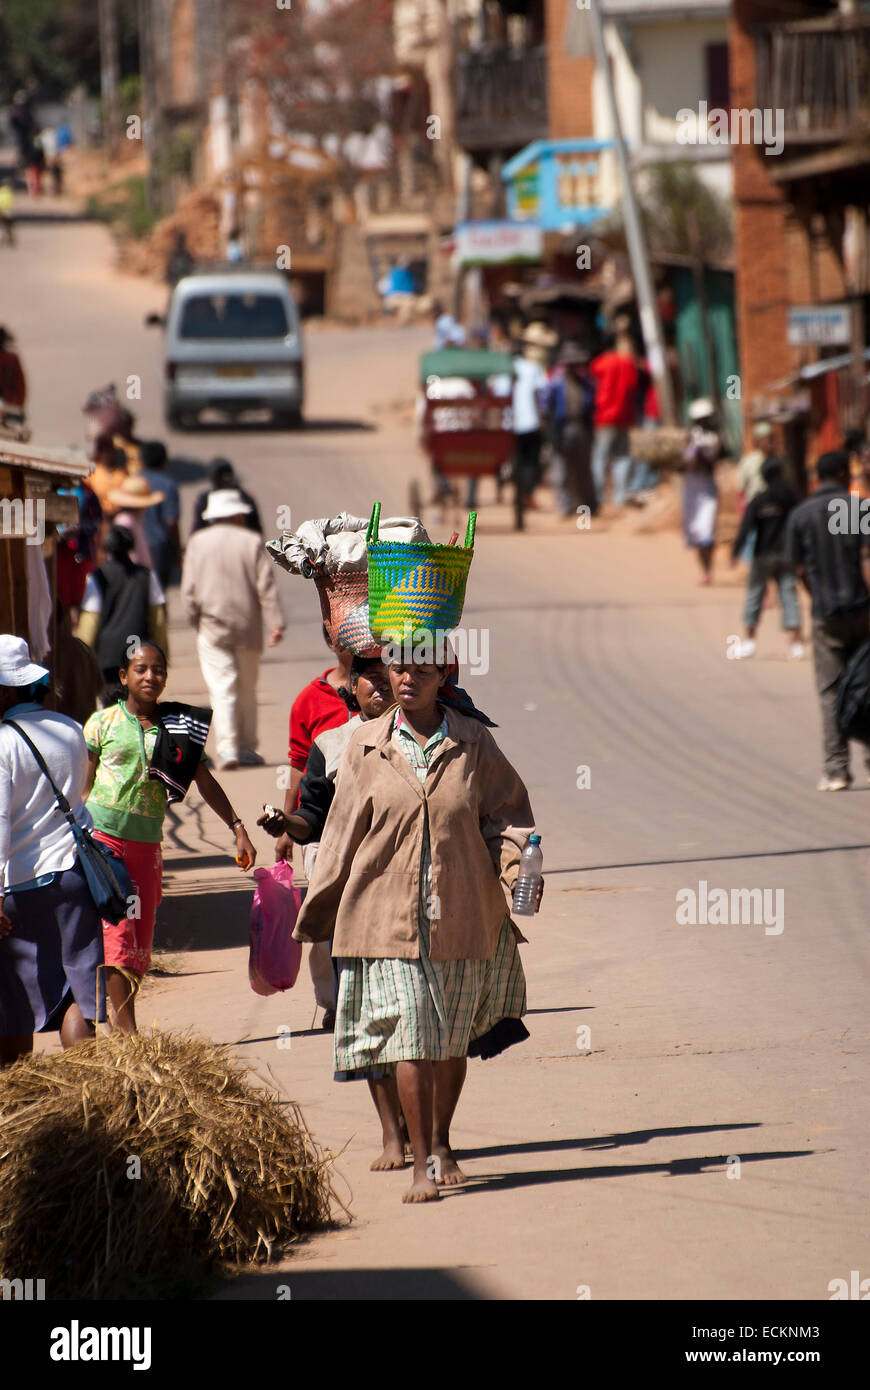 A Street scene in Ambositra, Madagascar. Stock Photo